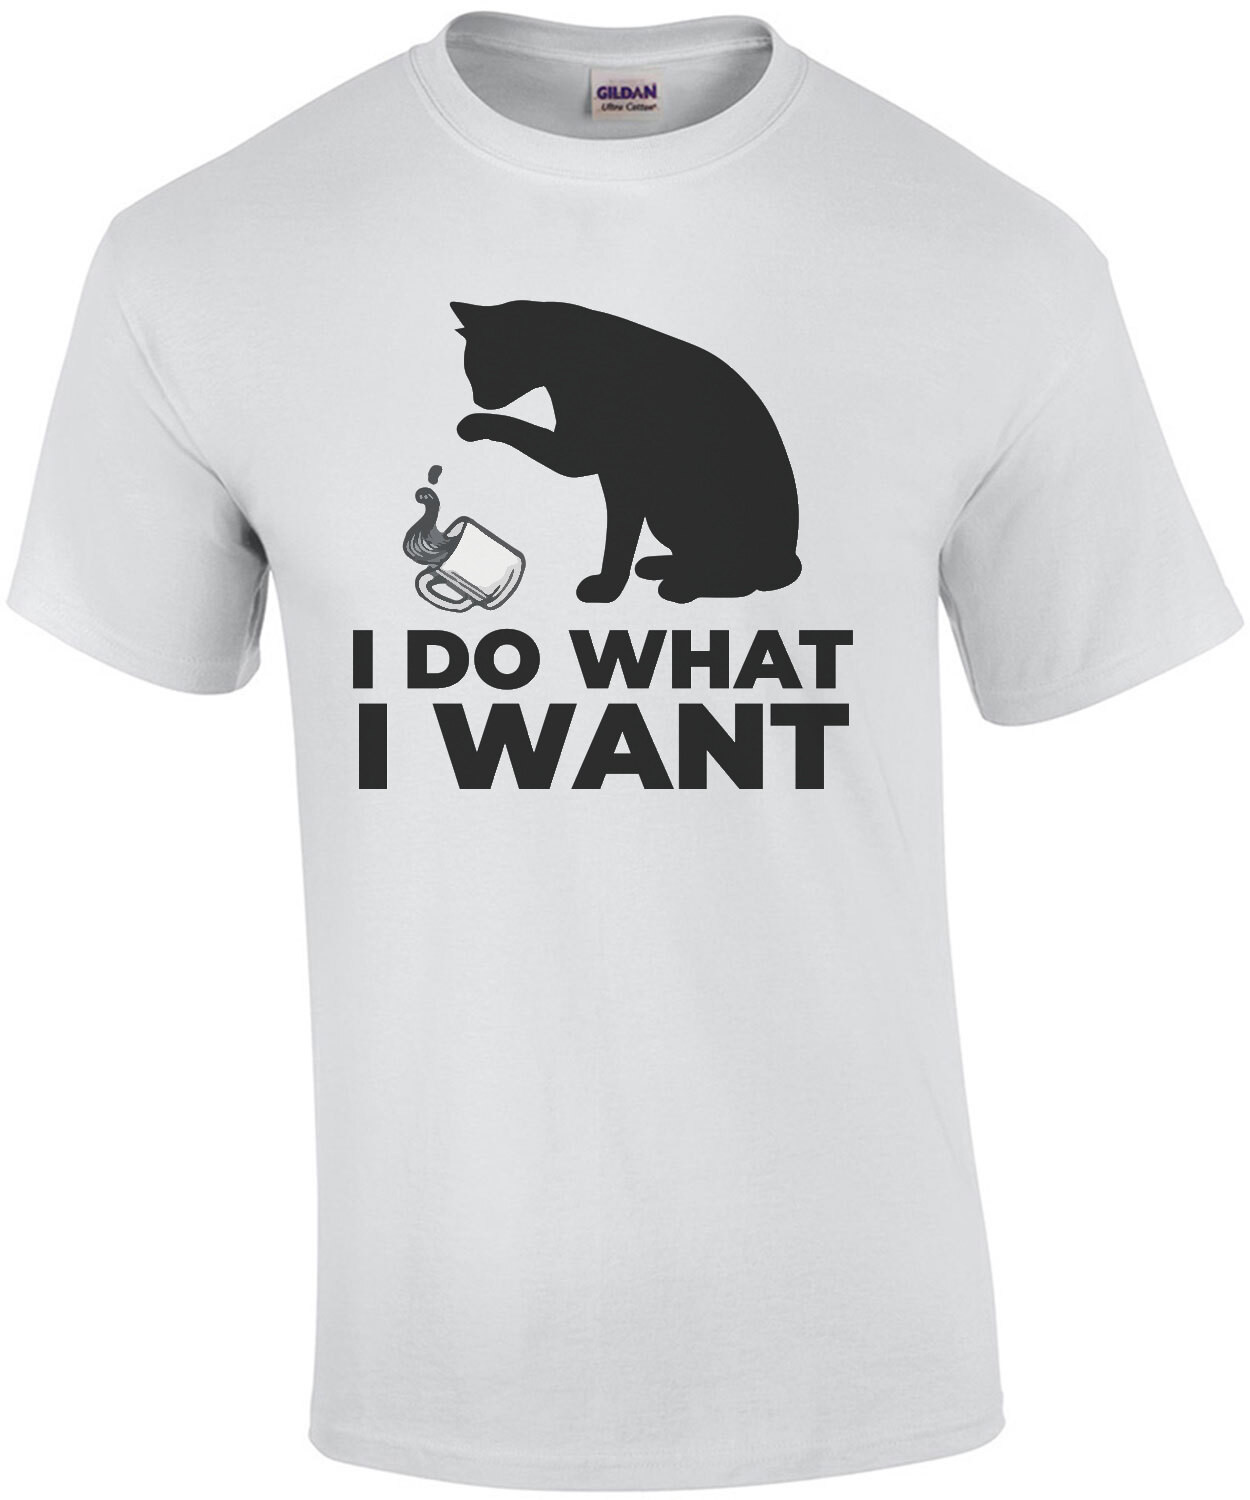 I do what I want - funny cat t-shirt